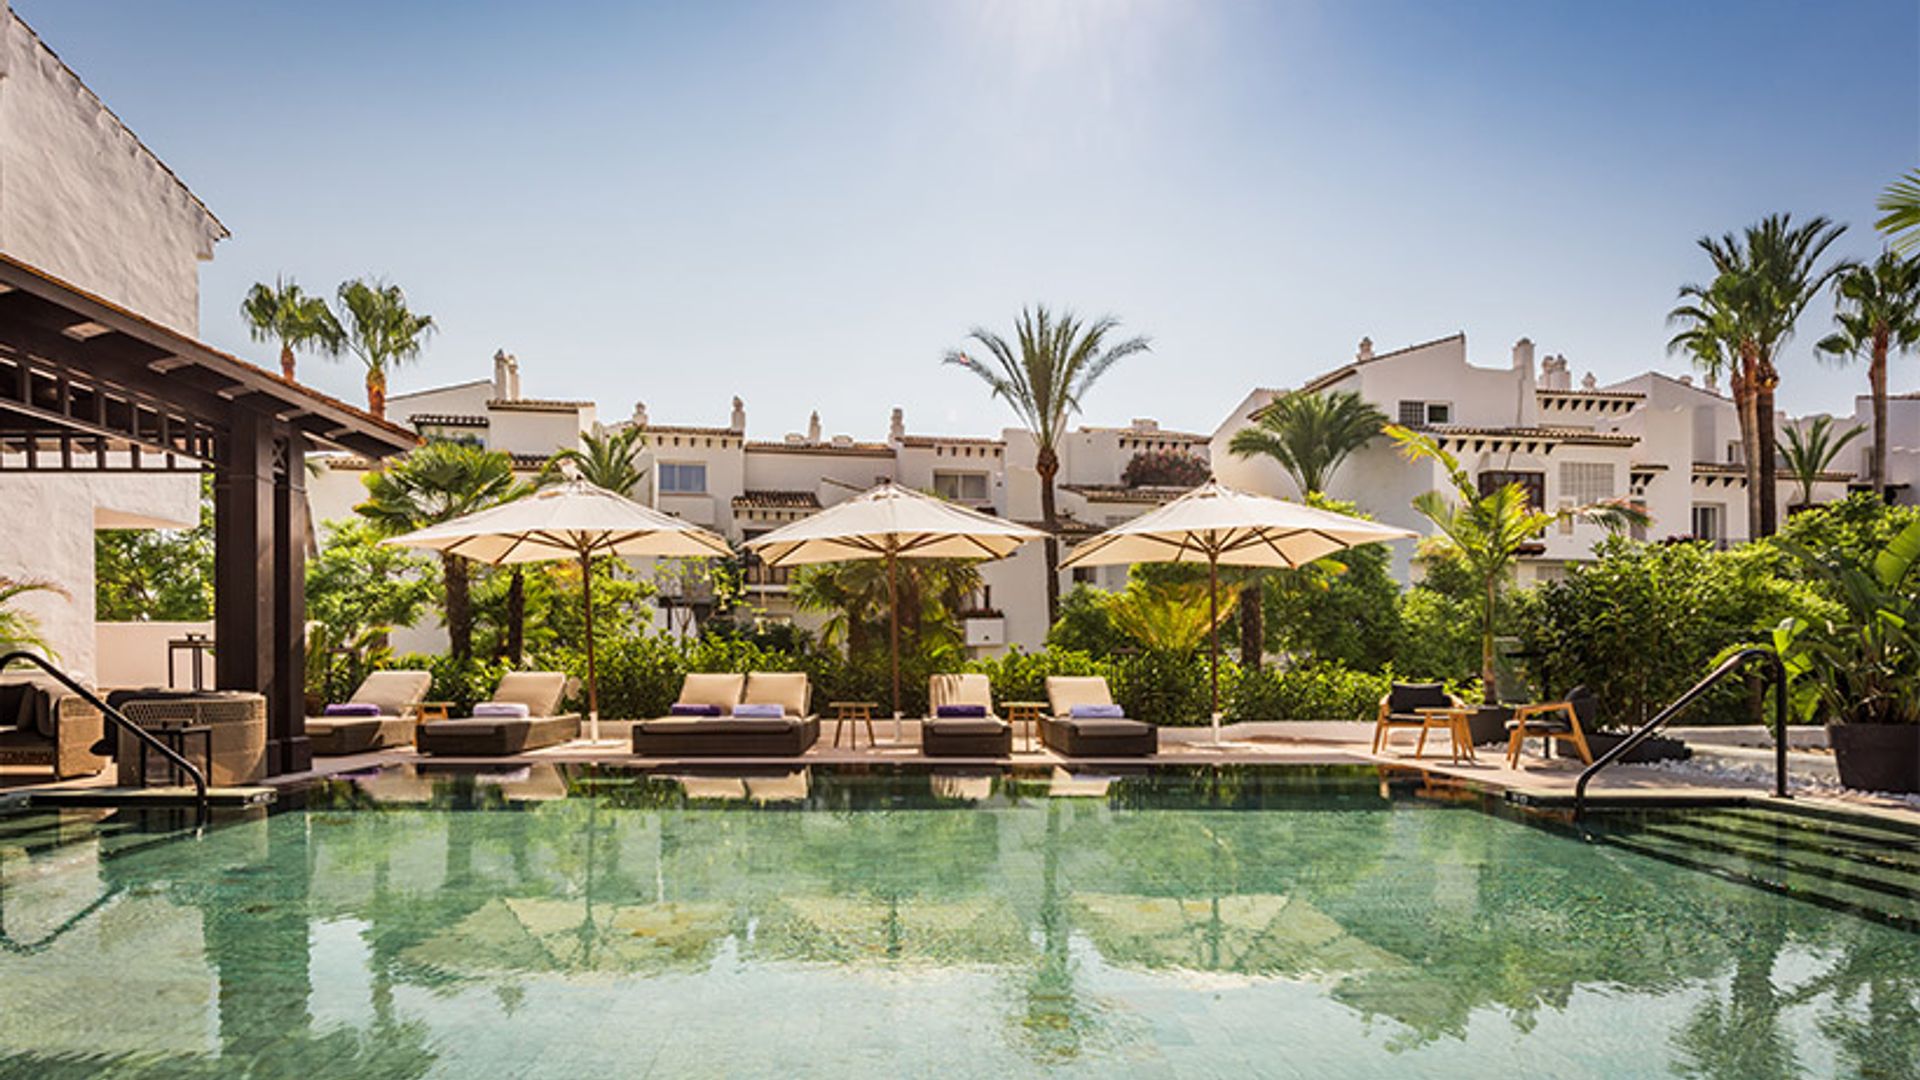 Take a look inside Marbella's most luxurious new celebrity hotspot - Nobu Hotel